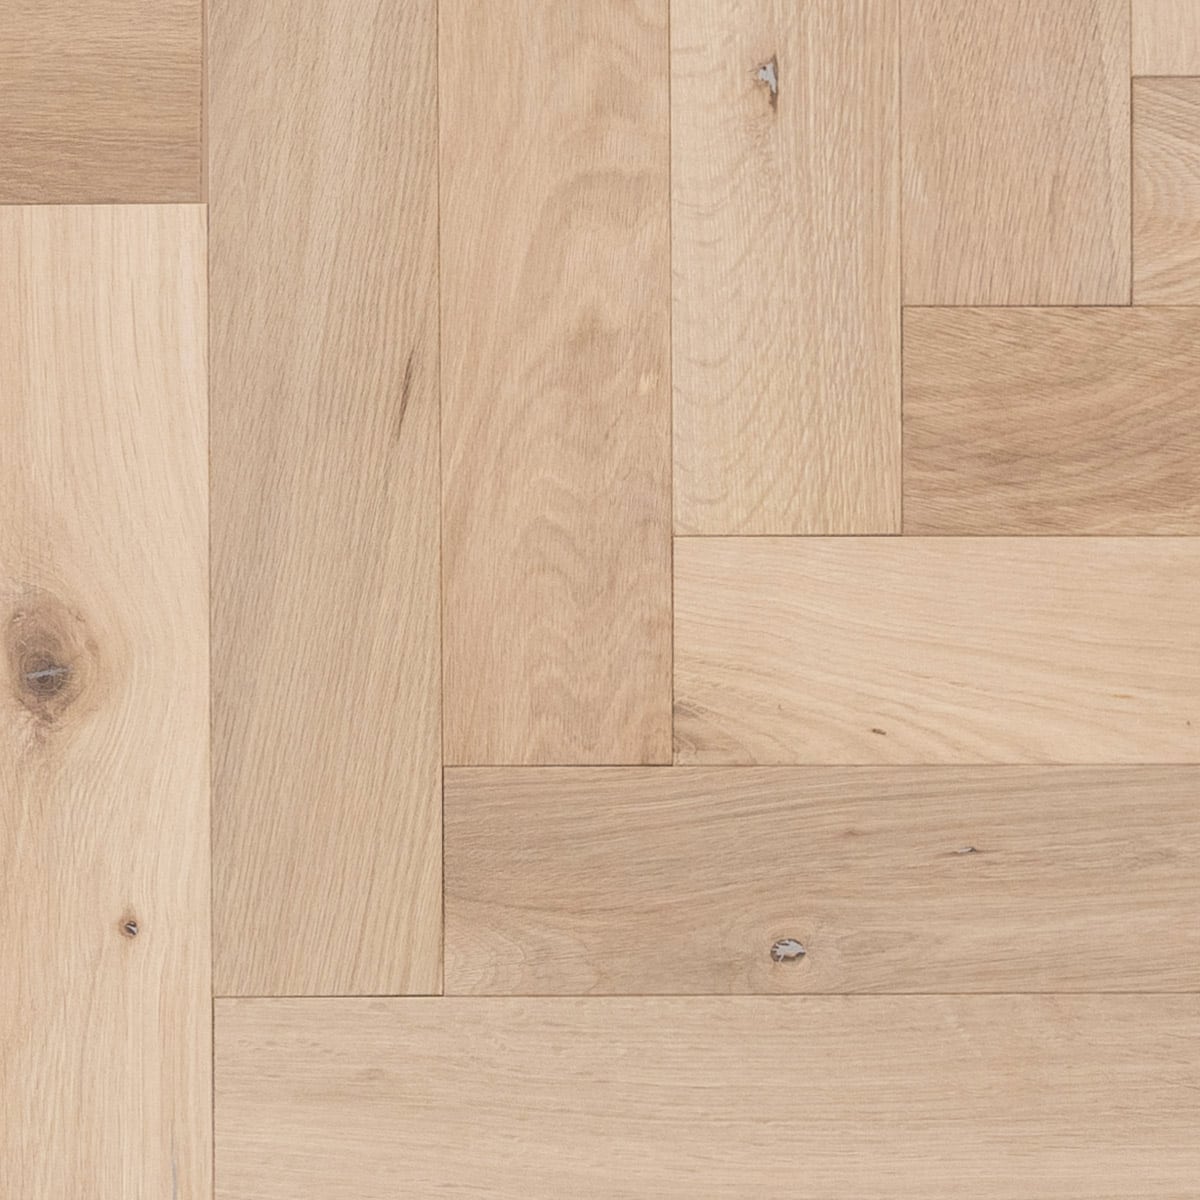 Deco Parquet Unfinished Oak wood flooring of engineered construction